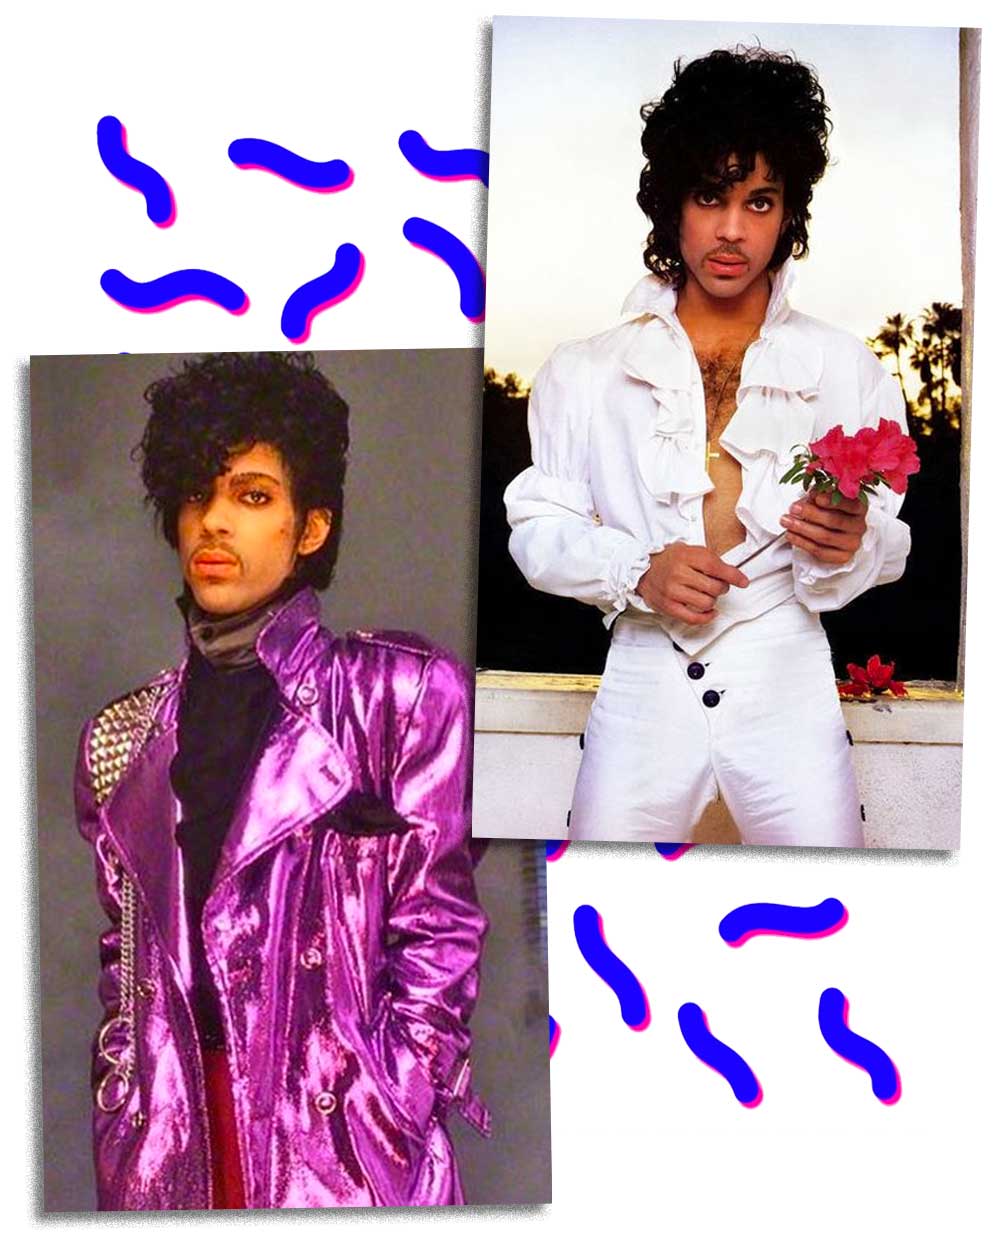 Prince Influence on the 80s Fashion